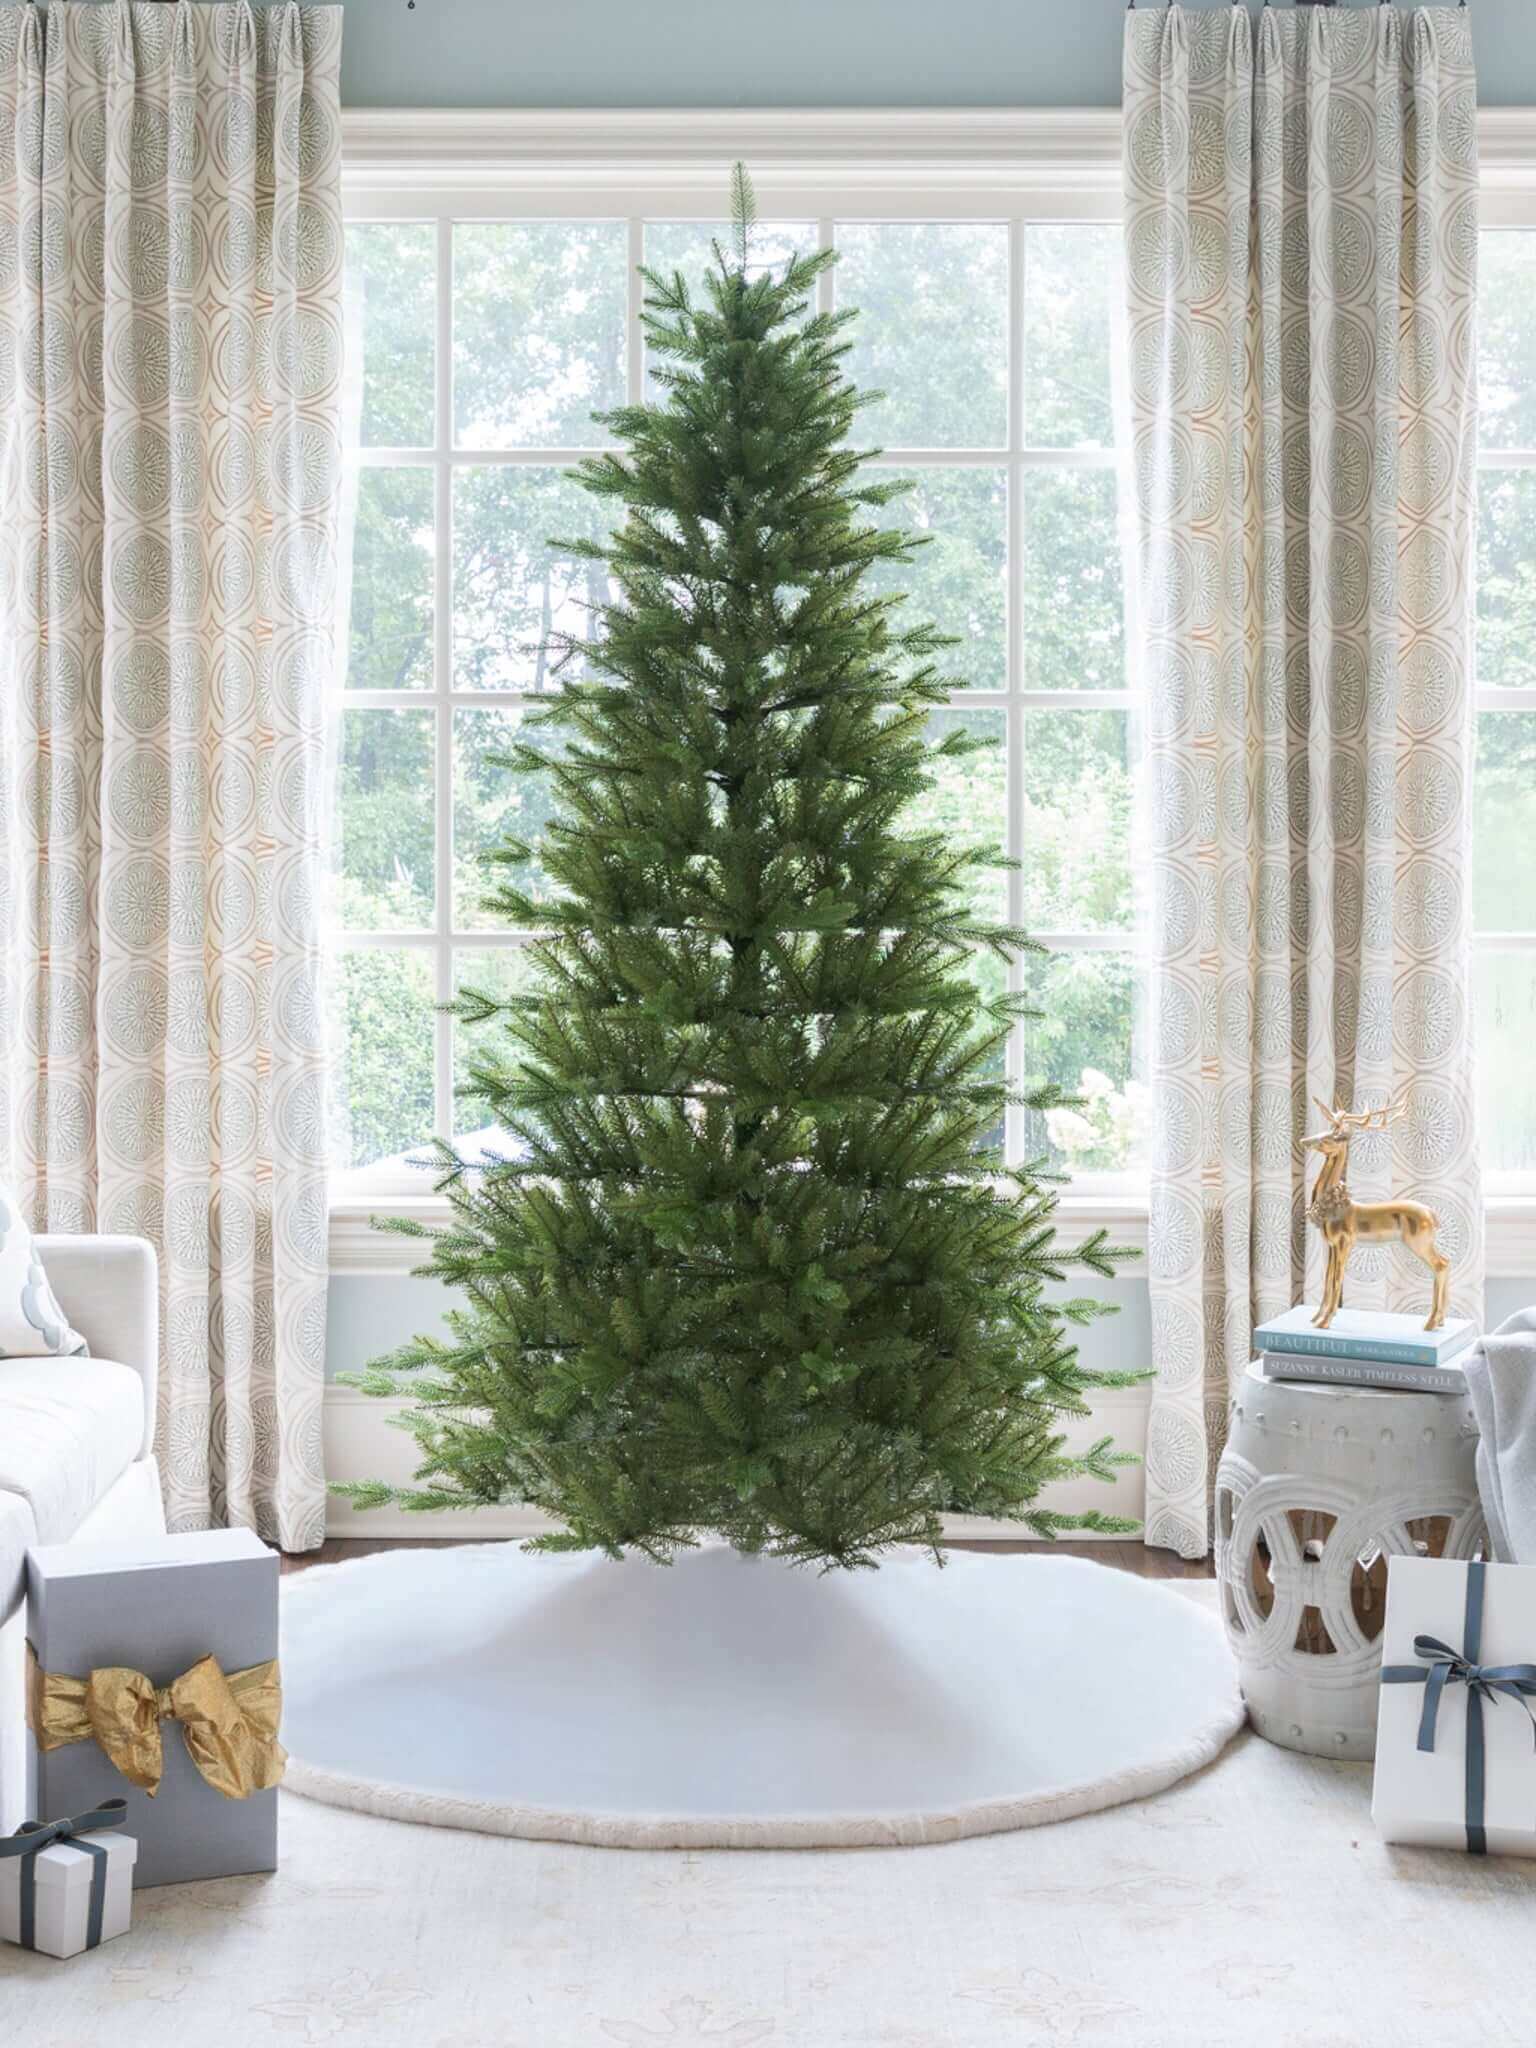 King of Christmas 12' Alpine Fir Green Slim Artificial Christmas Tree LED 1400 Warm White Led Lights